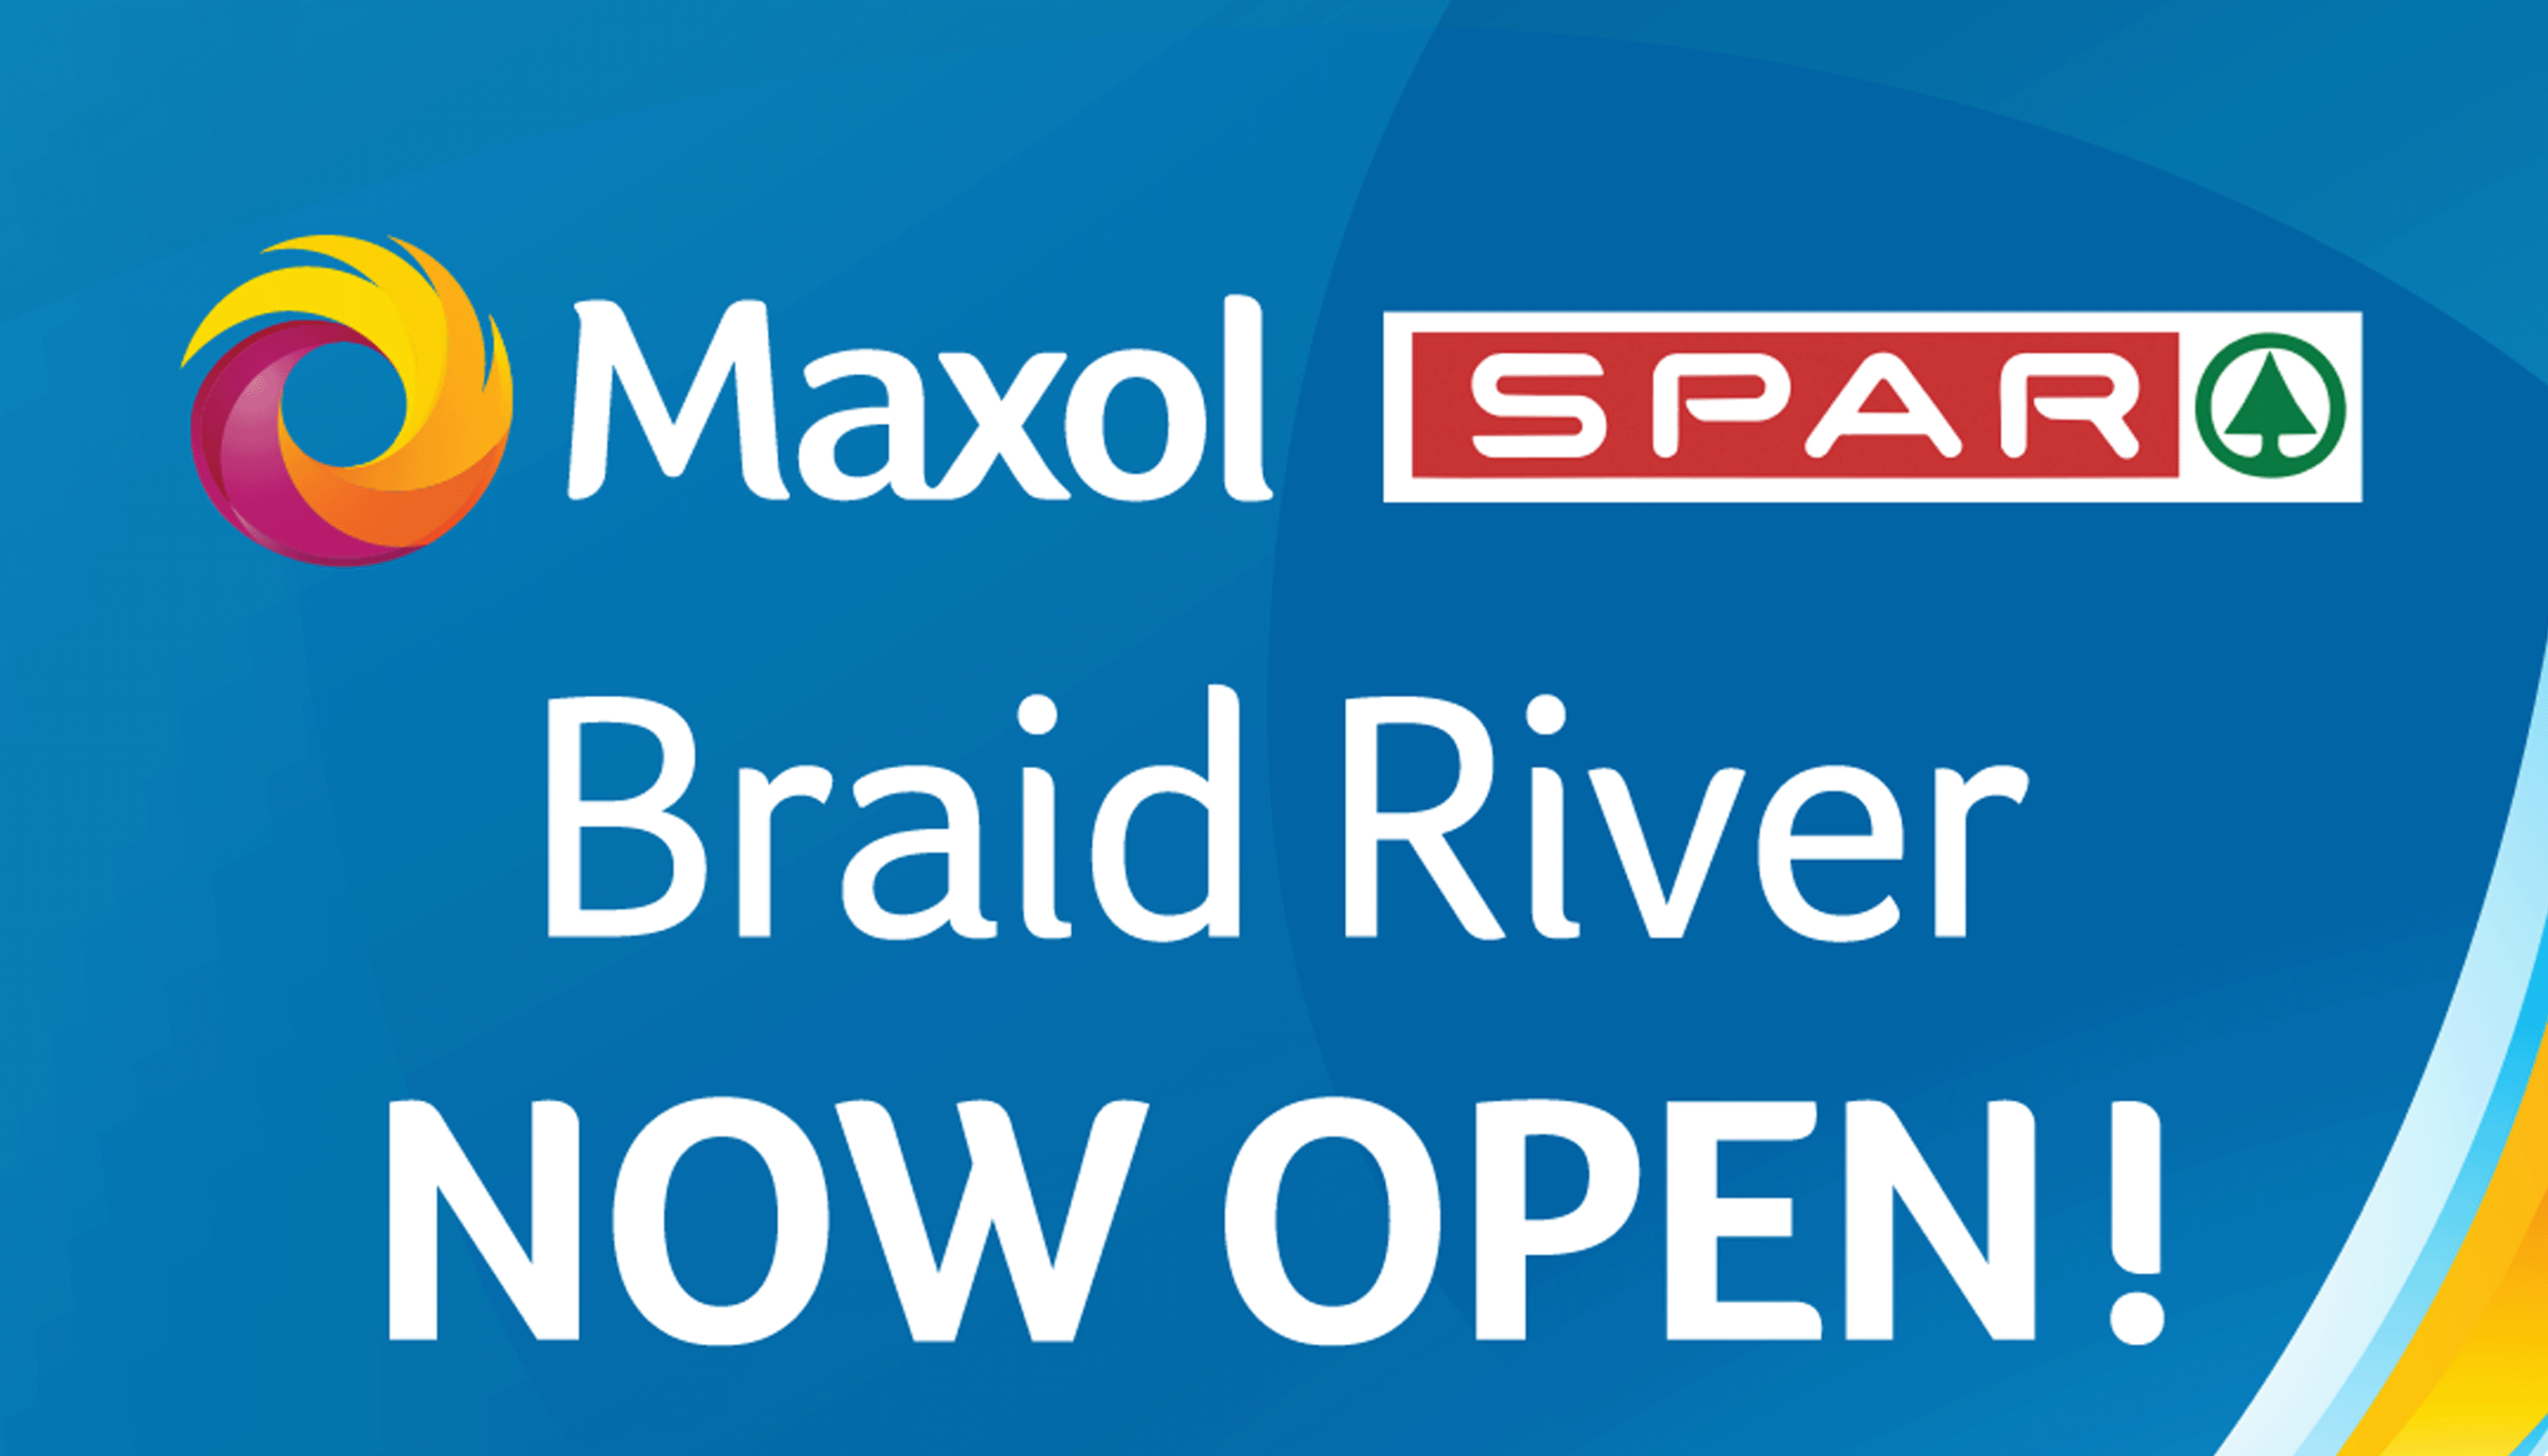 Maxol Service Station Braid River Ballymena 02825 651162